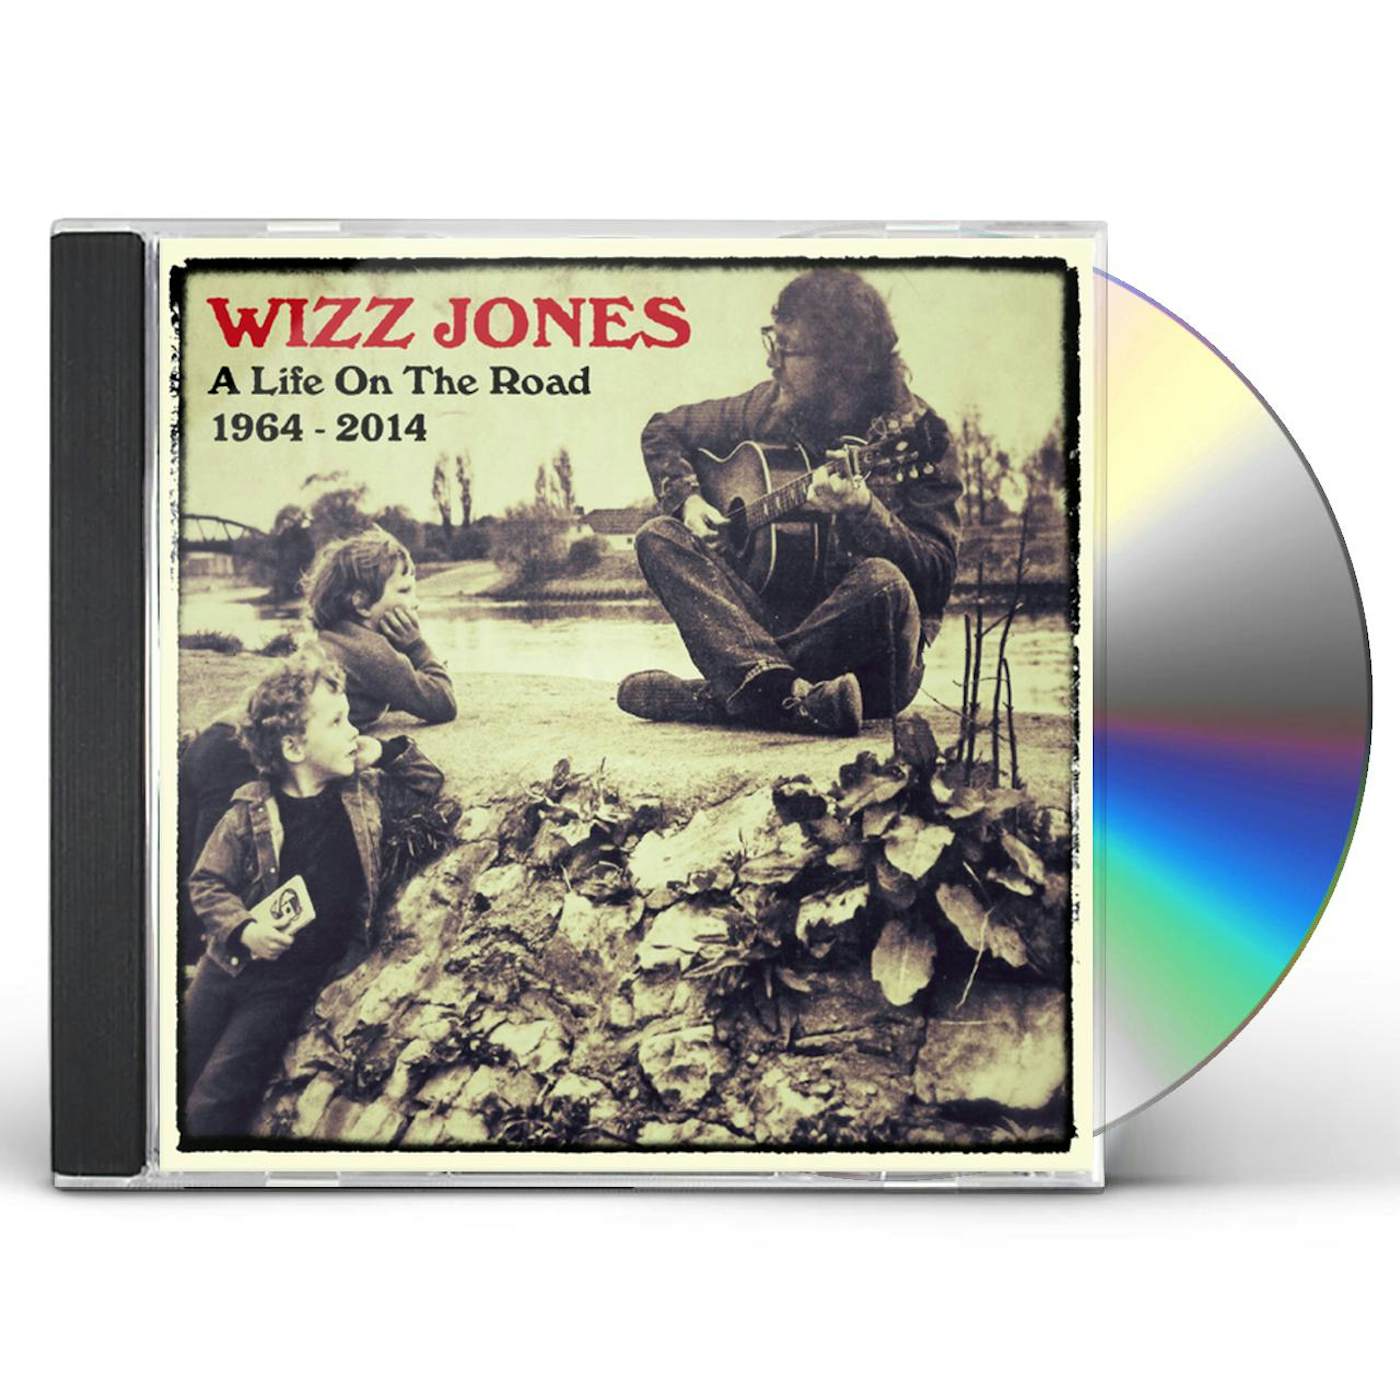 Wizz Jones LIFE ON THE ROAD 1964-2014 CD